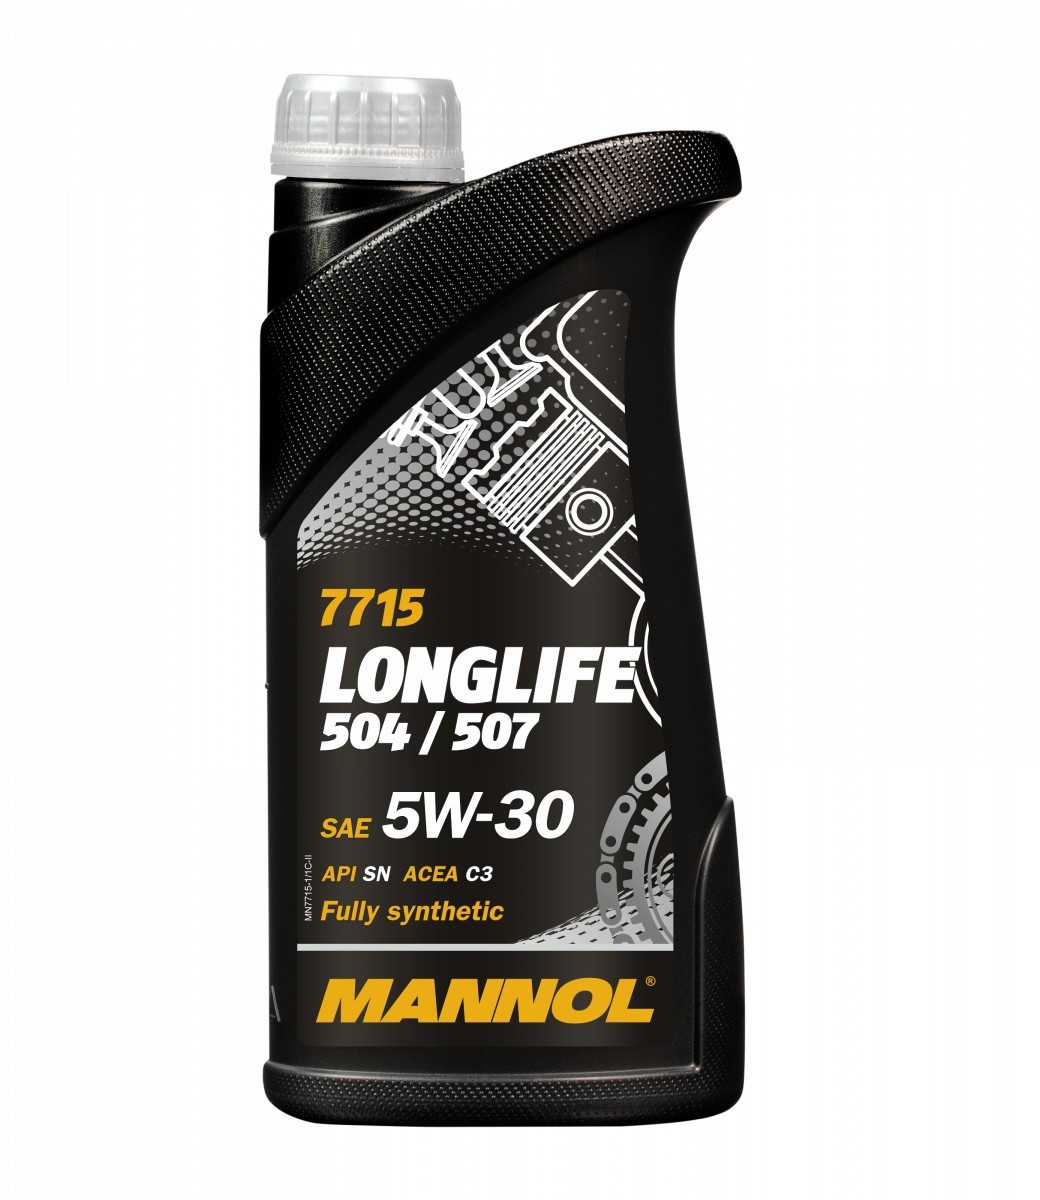 Моторное масло Mannol Longlife 504/507 5W-30 7715 1L